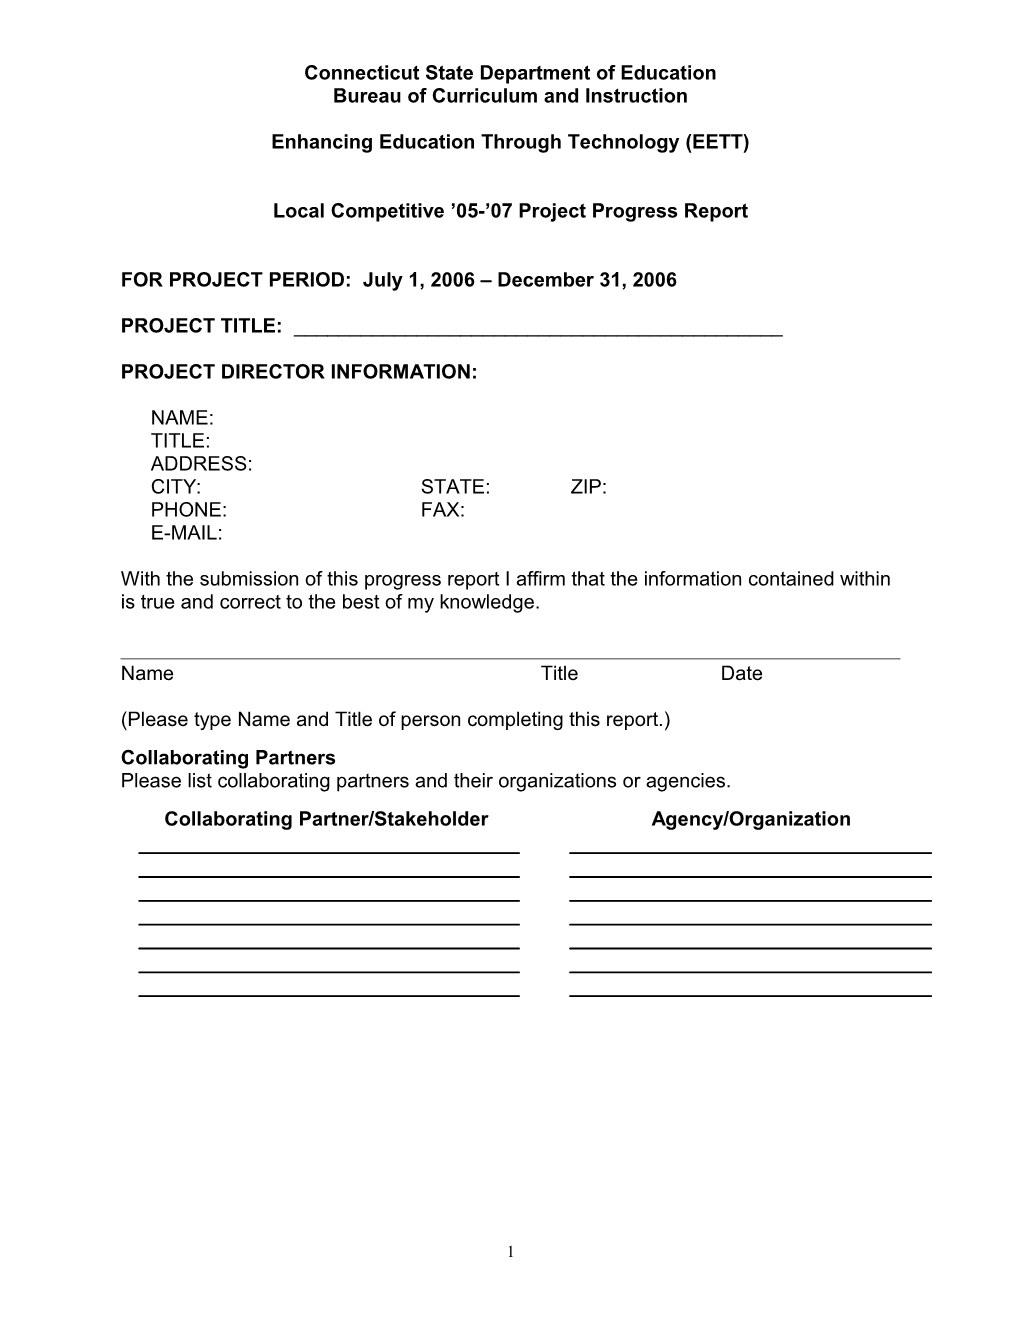 EETT 05-07 Progress Report Form